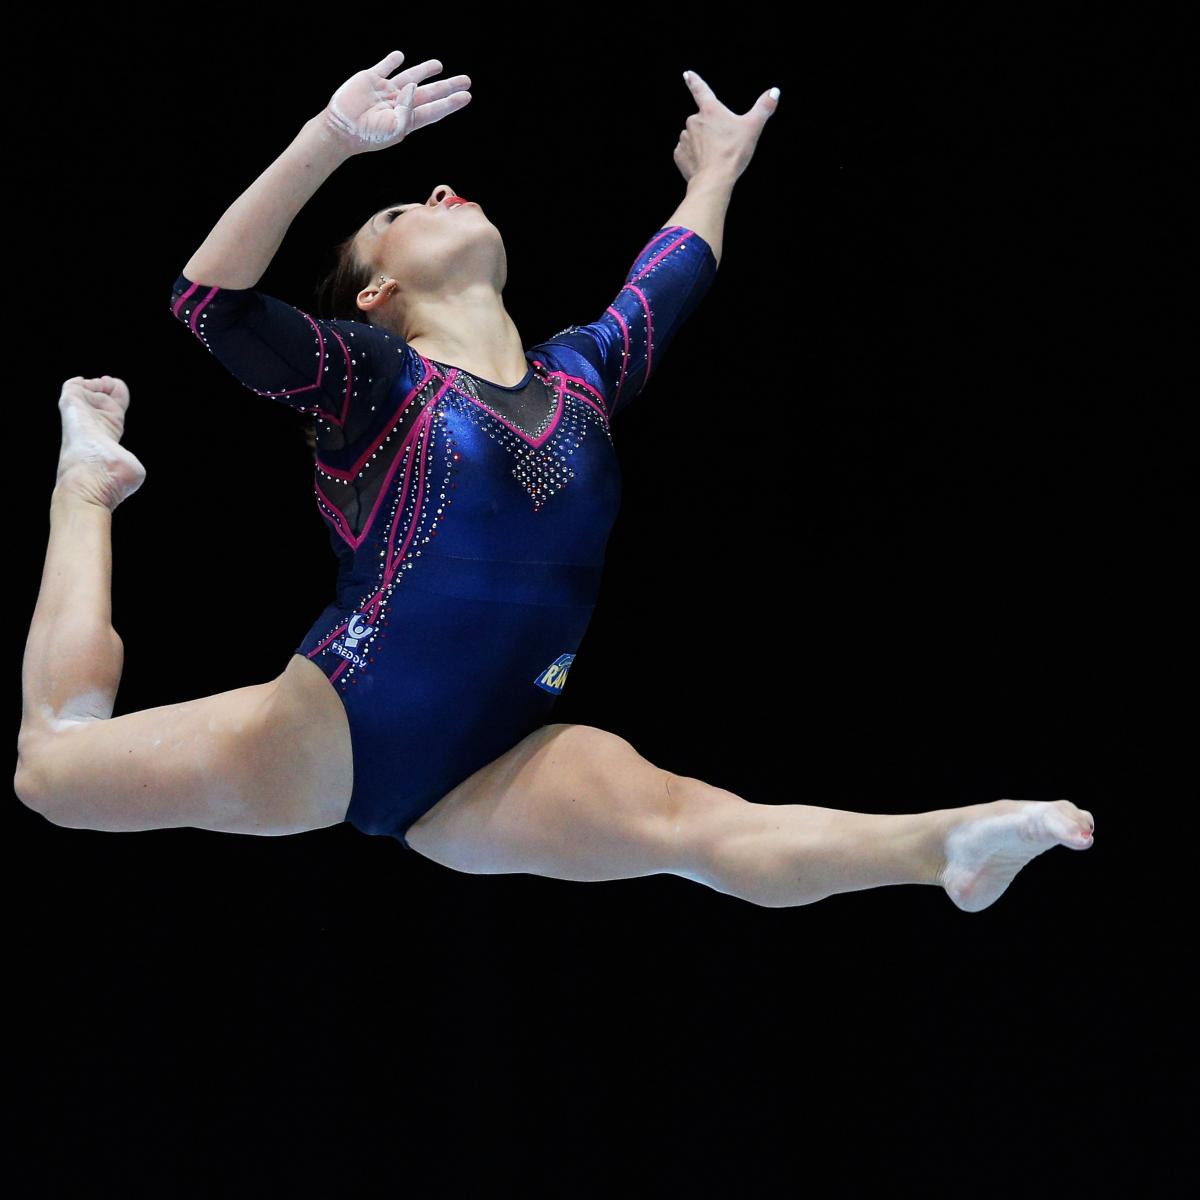 Southampton Gymnastics Club offers Acrobatic Gymnastics